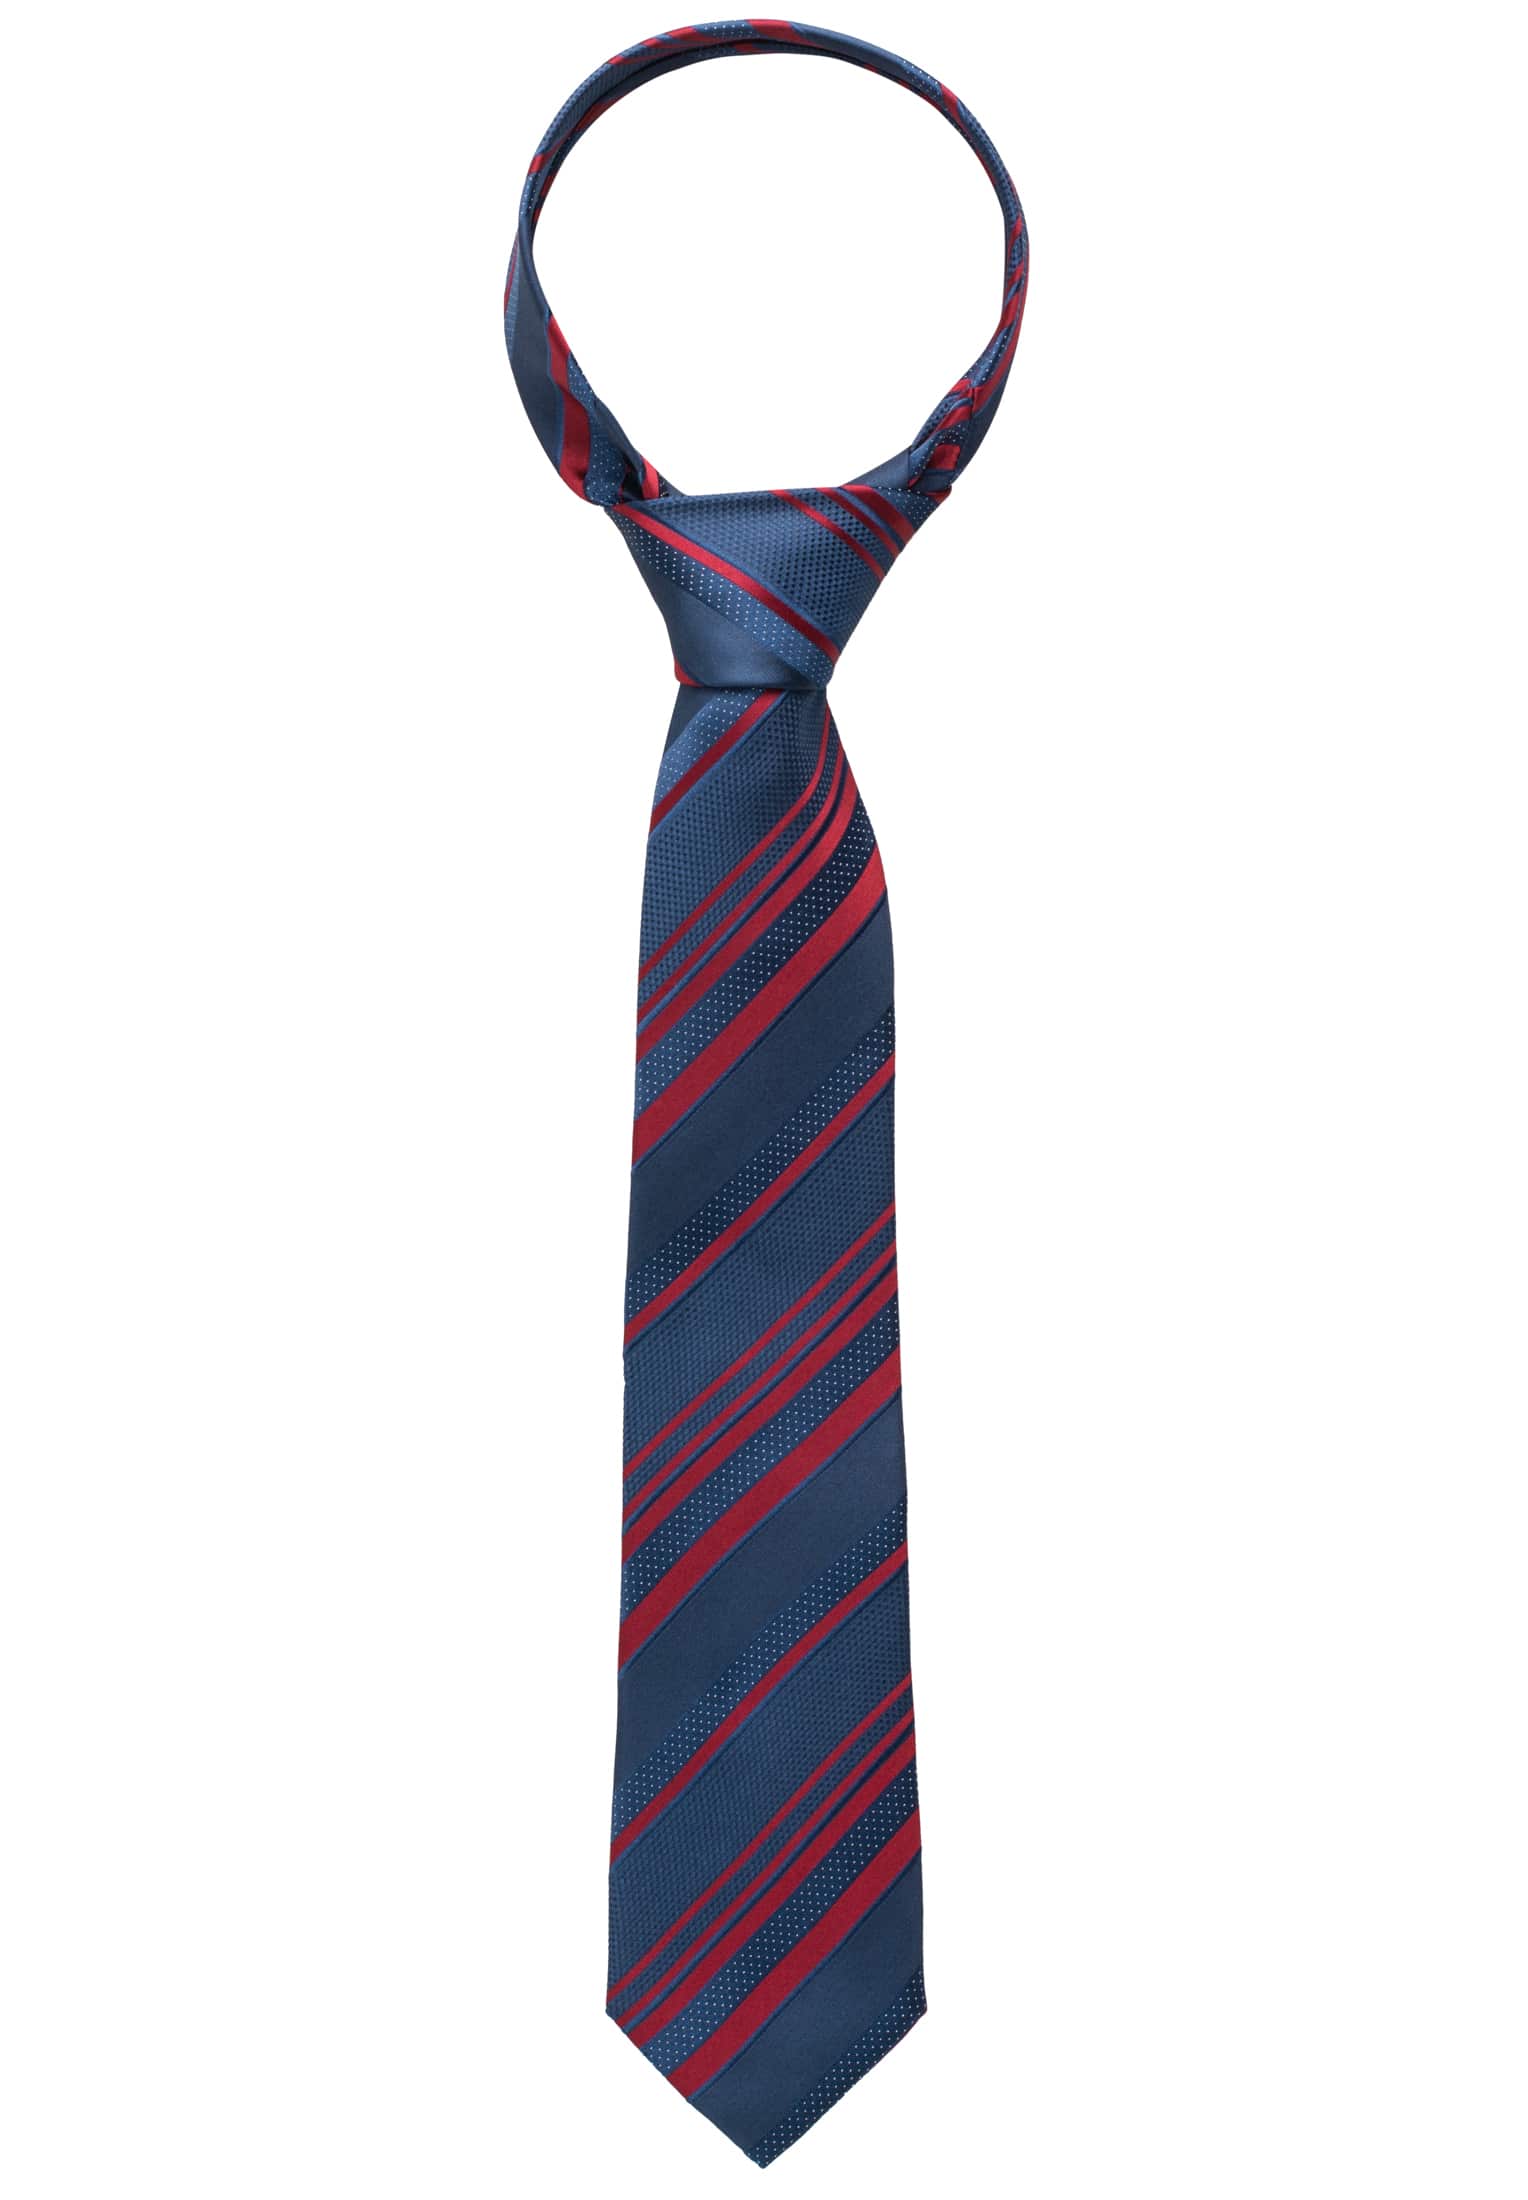 Verkäufe und Einkäufe Krawatte in navy | | navy 1AC00408-01-91-142 142 | gestreift